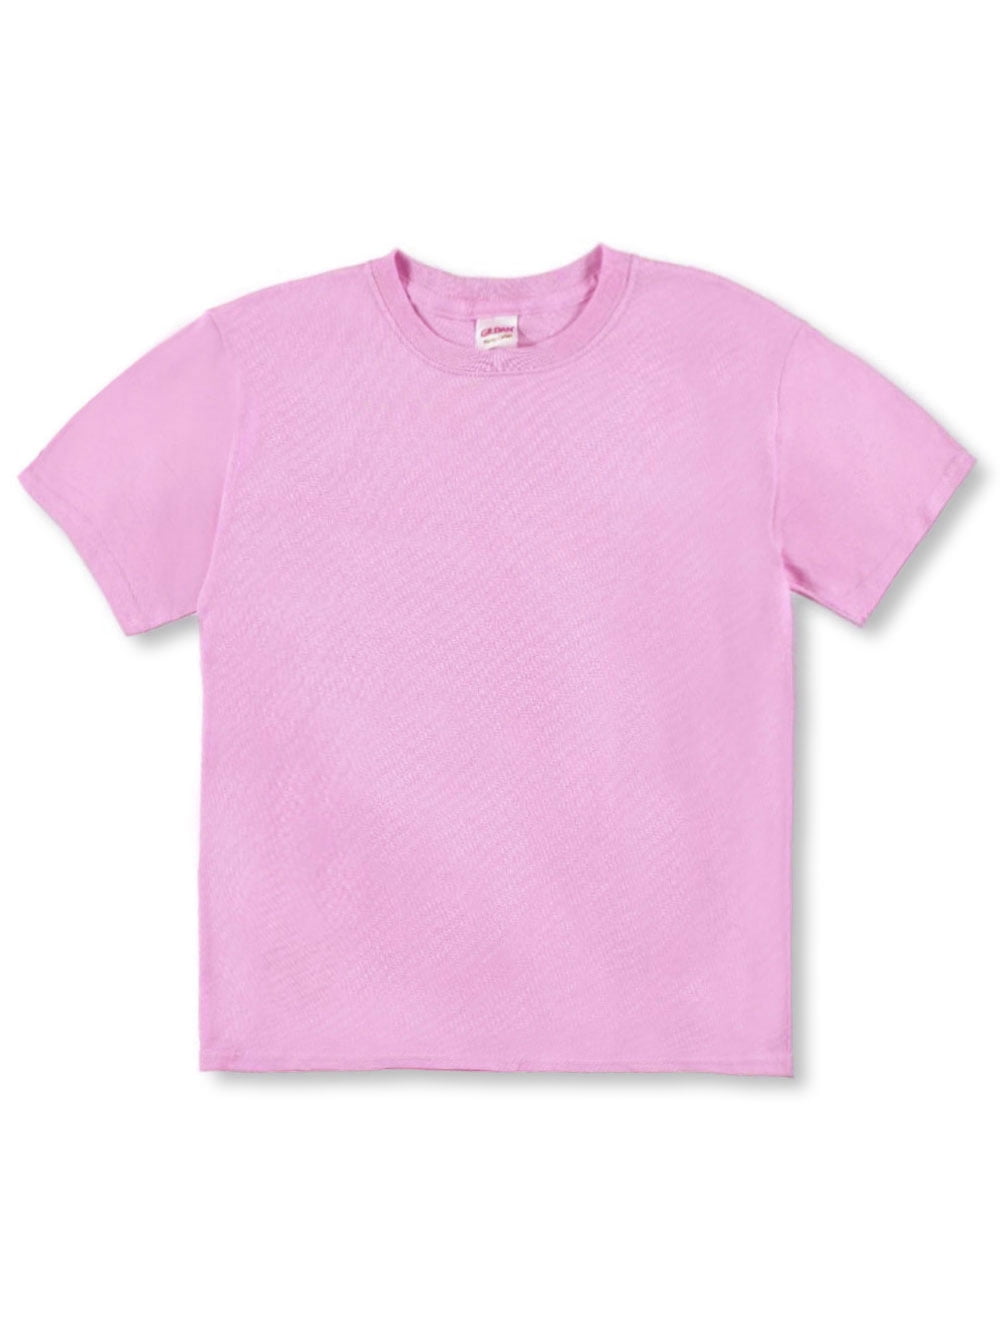 Gildan Unisex Youth T-Shirt - pink, xl/18-20 (Big Girls) - Walmart.com